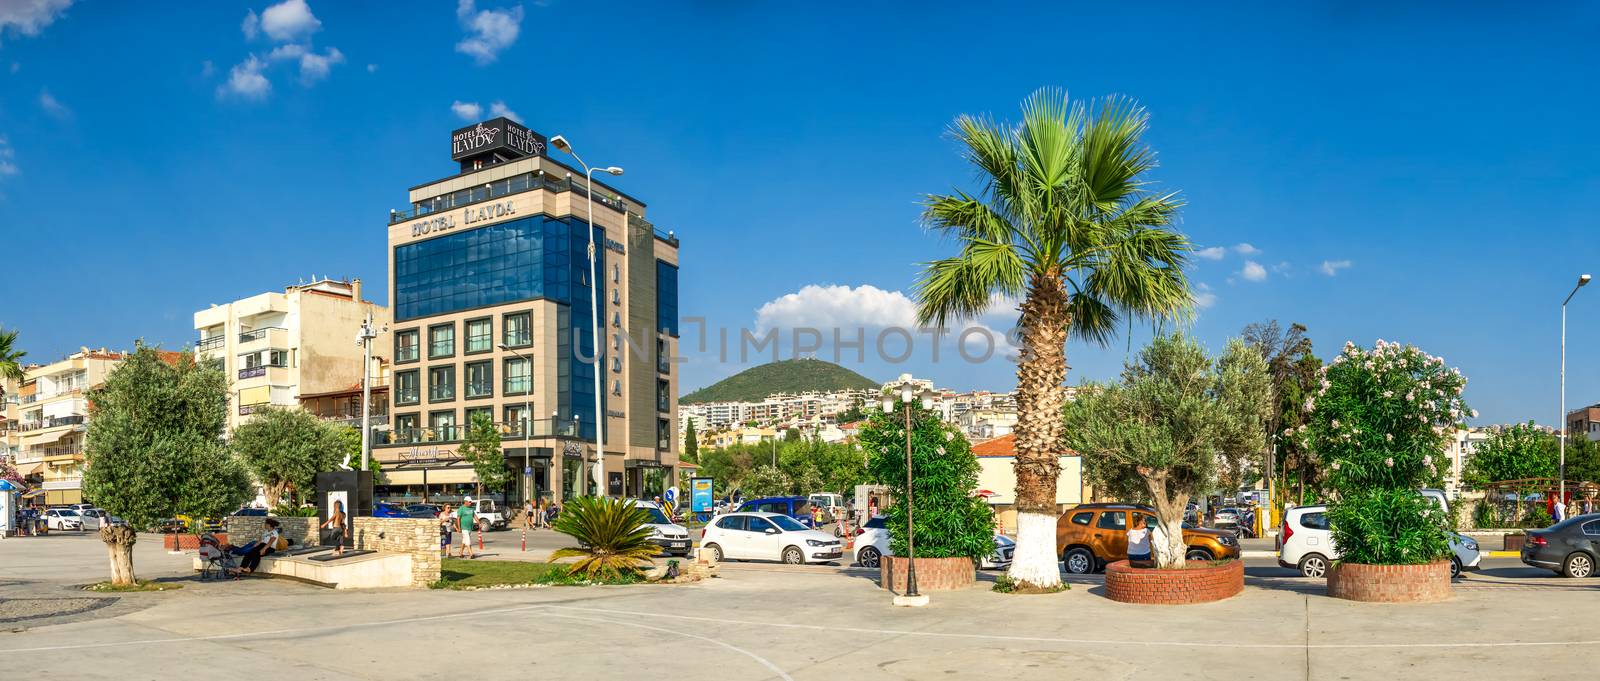 Resort town of Kusadasi in Aydin, Turkey by Multipedia